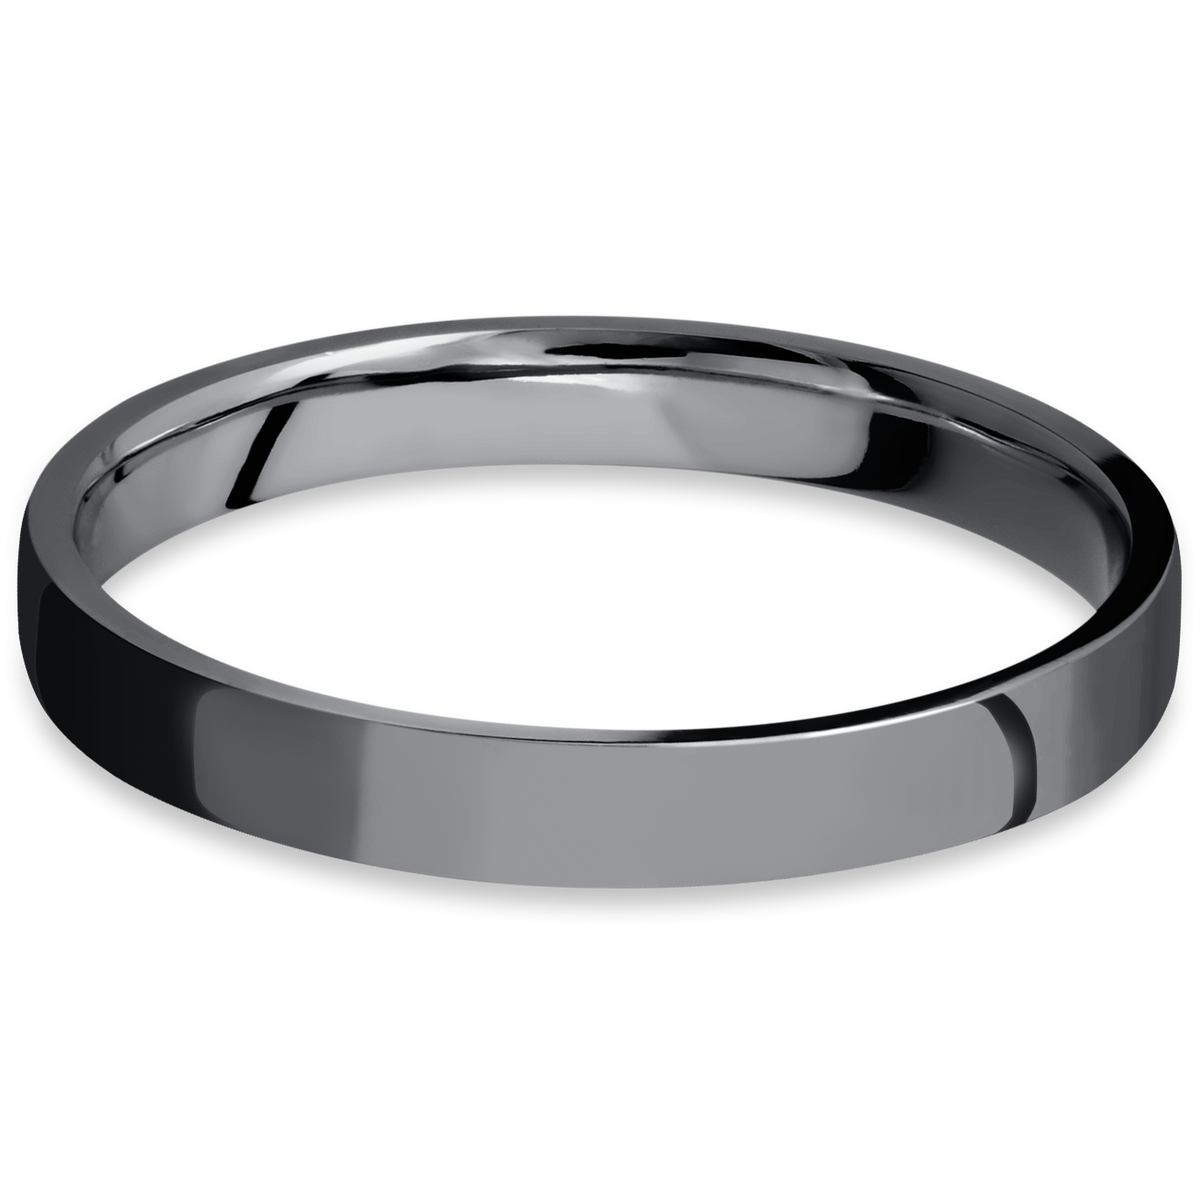 3mm wide flat tantalum women&#39;s wedding ring with polish finish.